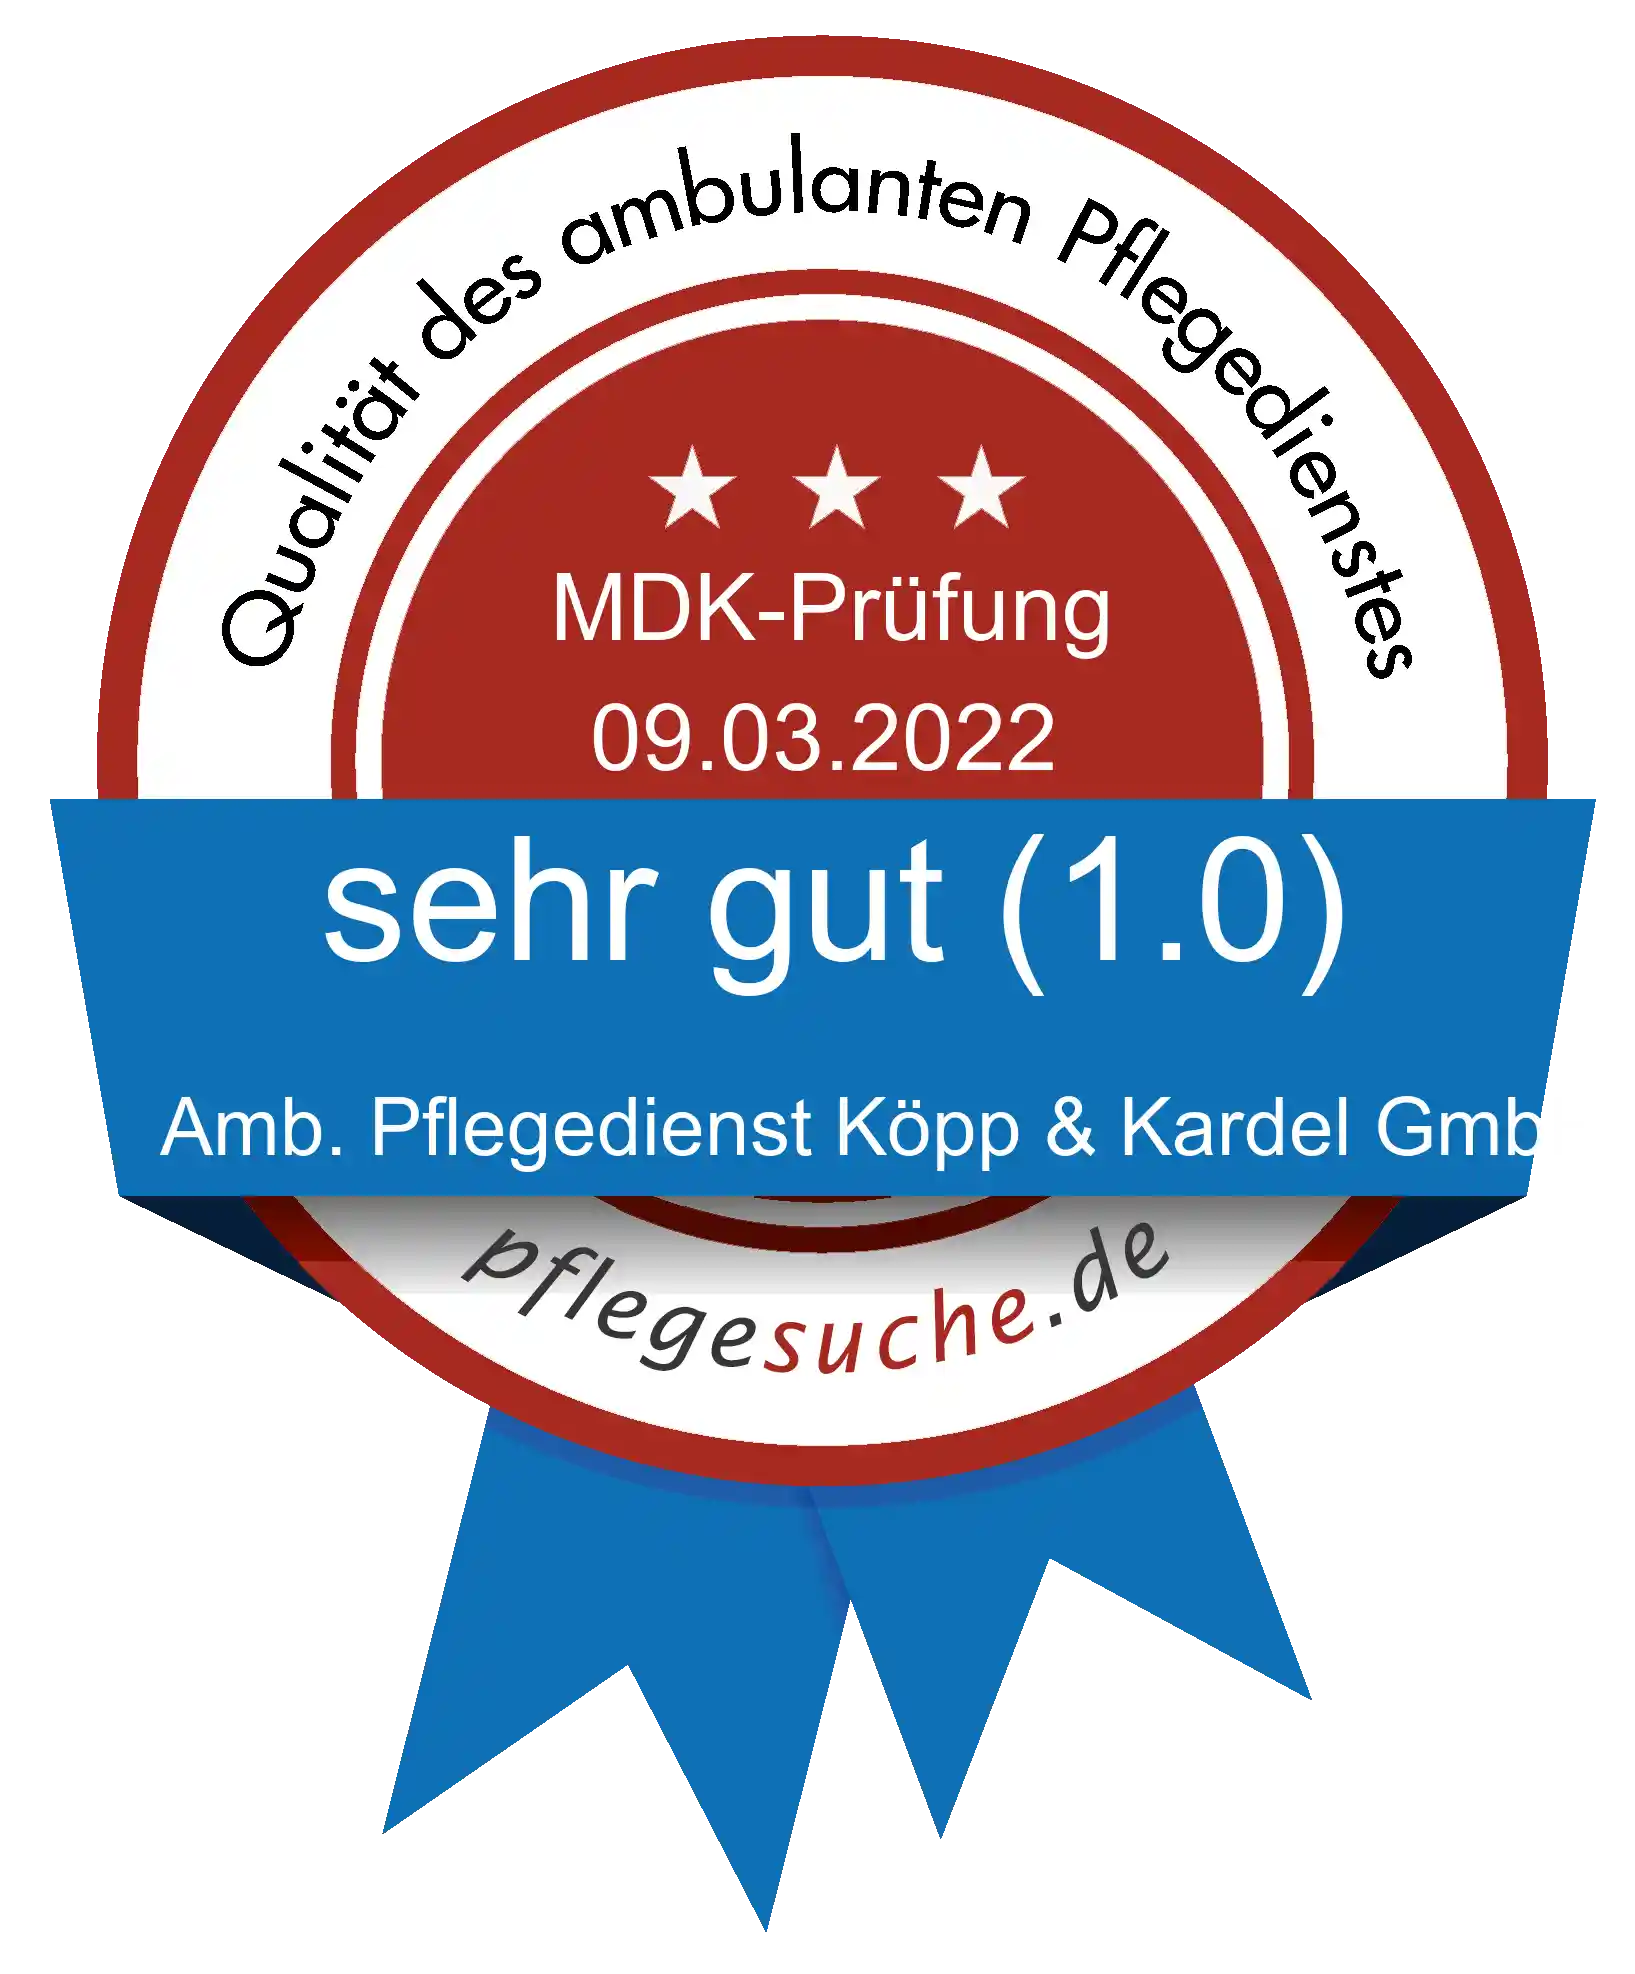 Siegel Benotung: Amb. Pflegedienst Köpp & Kardel GmbH